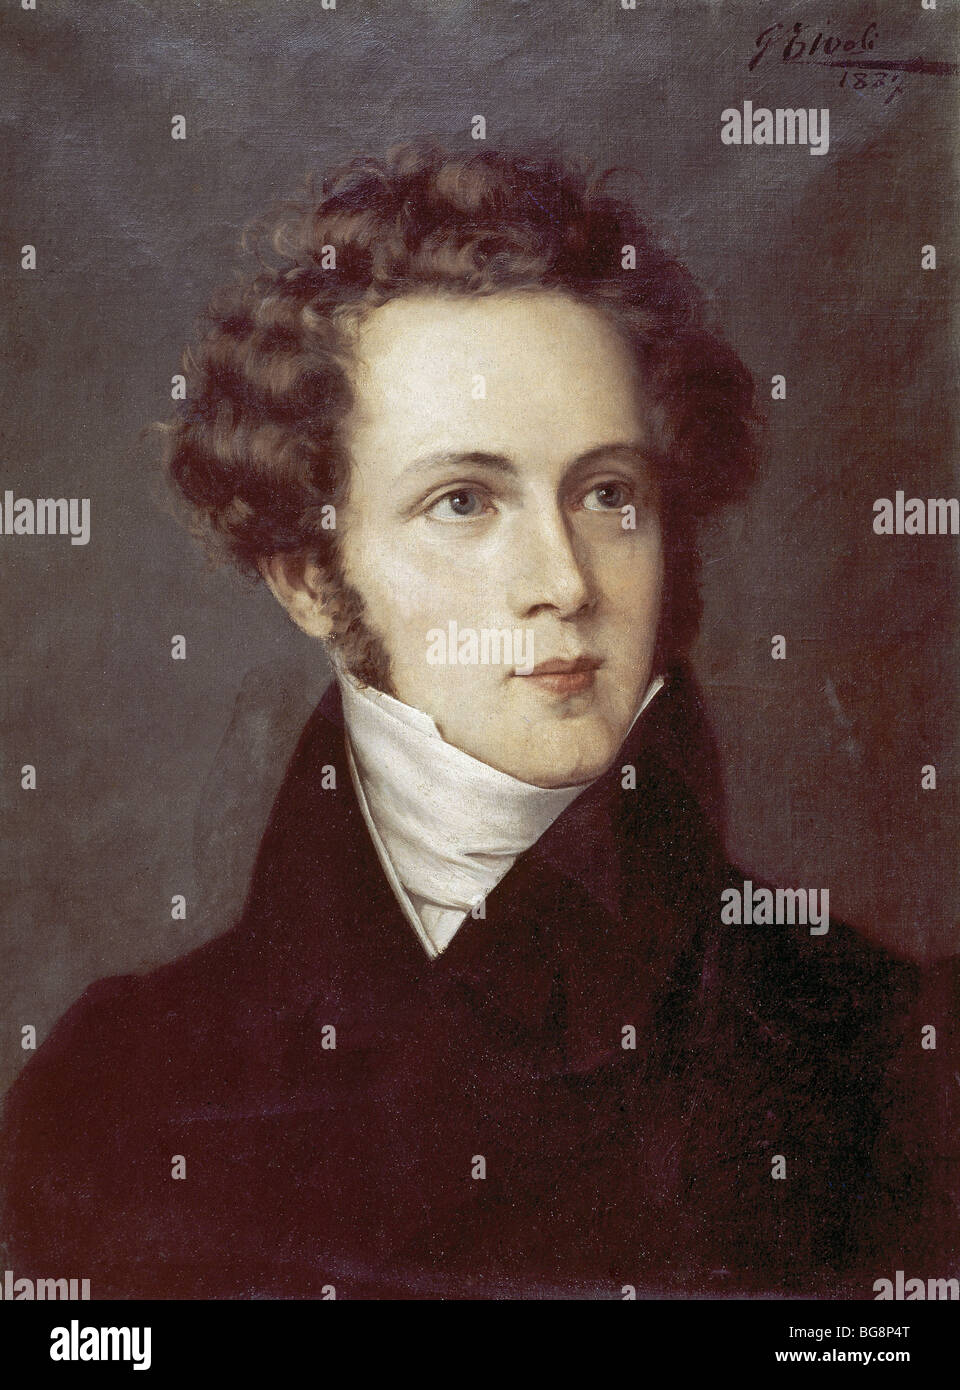 BELLINI, Vincenzo (Catania, 1801-Puteaux, 1835). Italienischer Komponist. Gemälde von G. Tivoli. Stockfoto